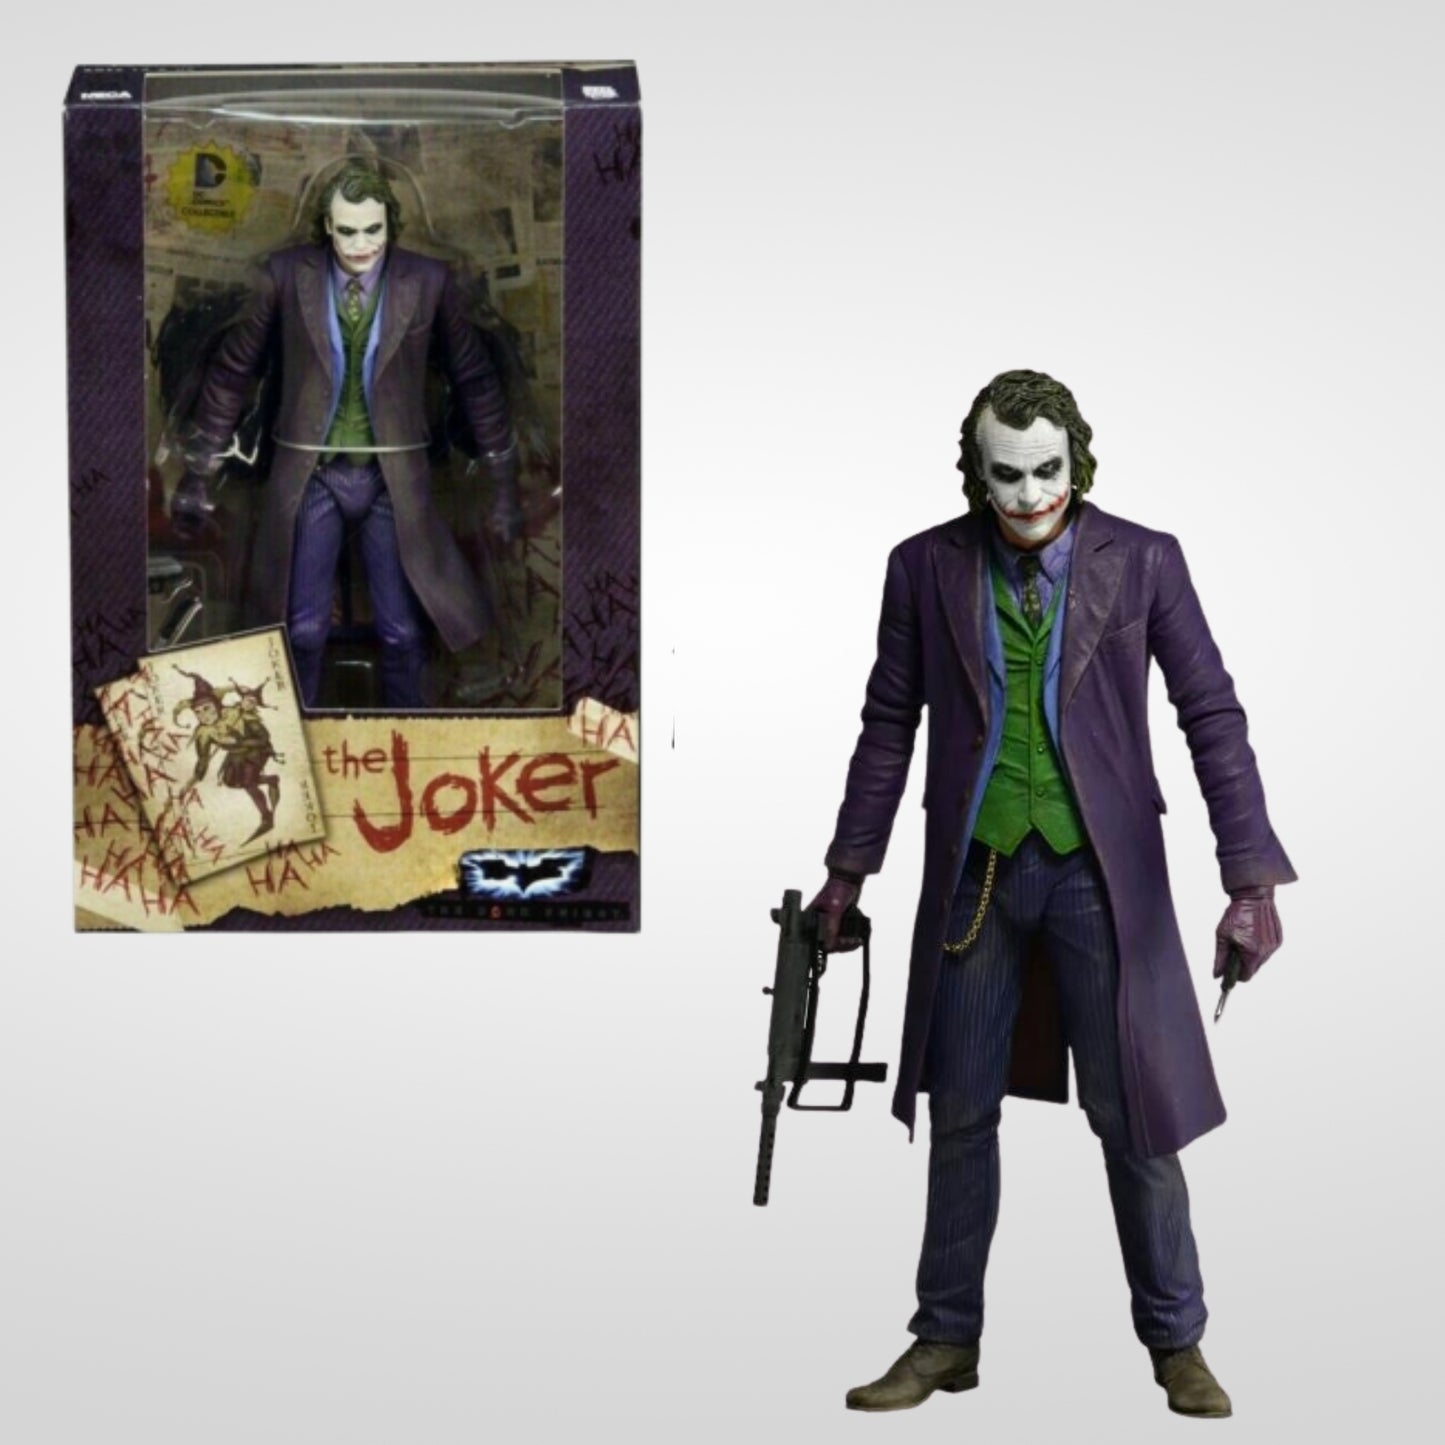 The Dark Knight Trilogy - Joker Wall Mural | Buy online at